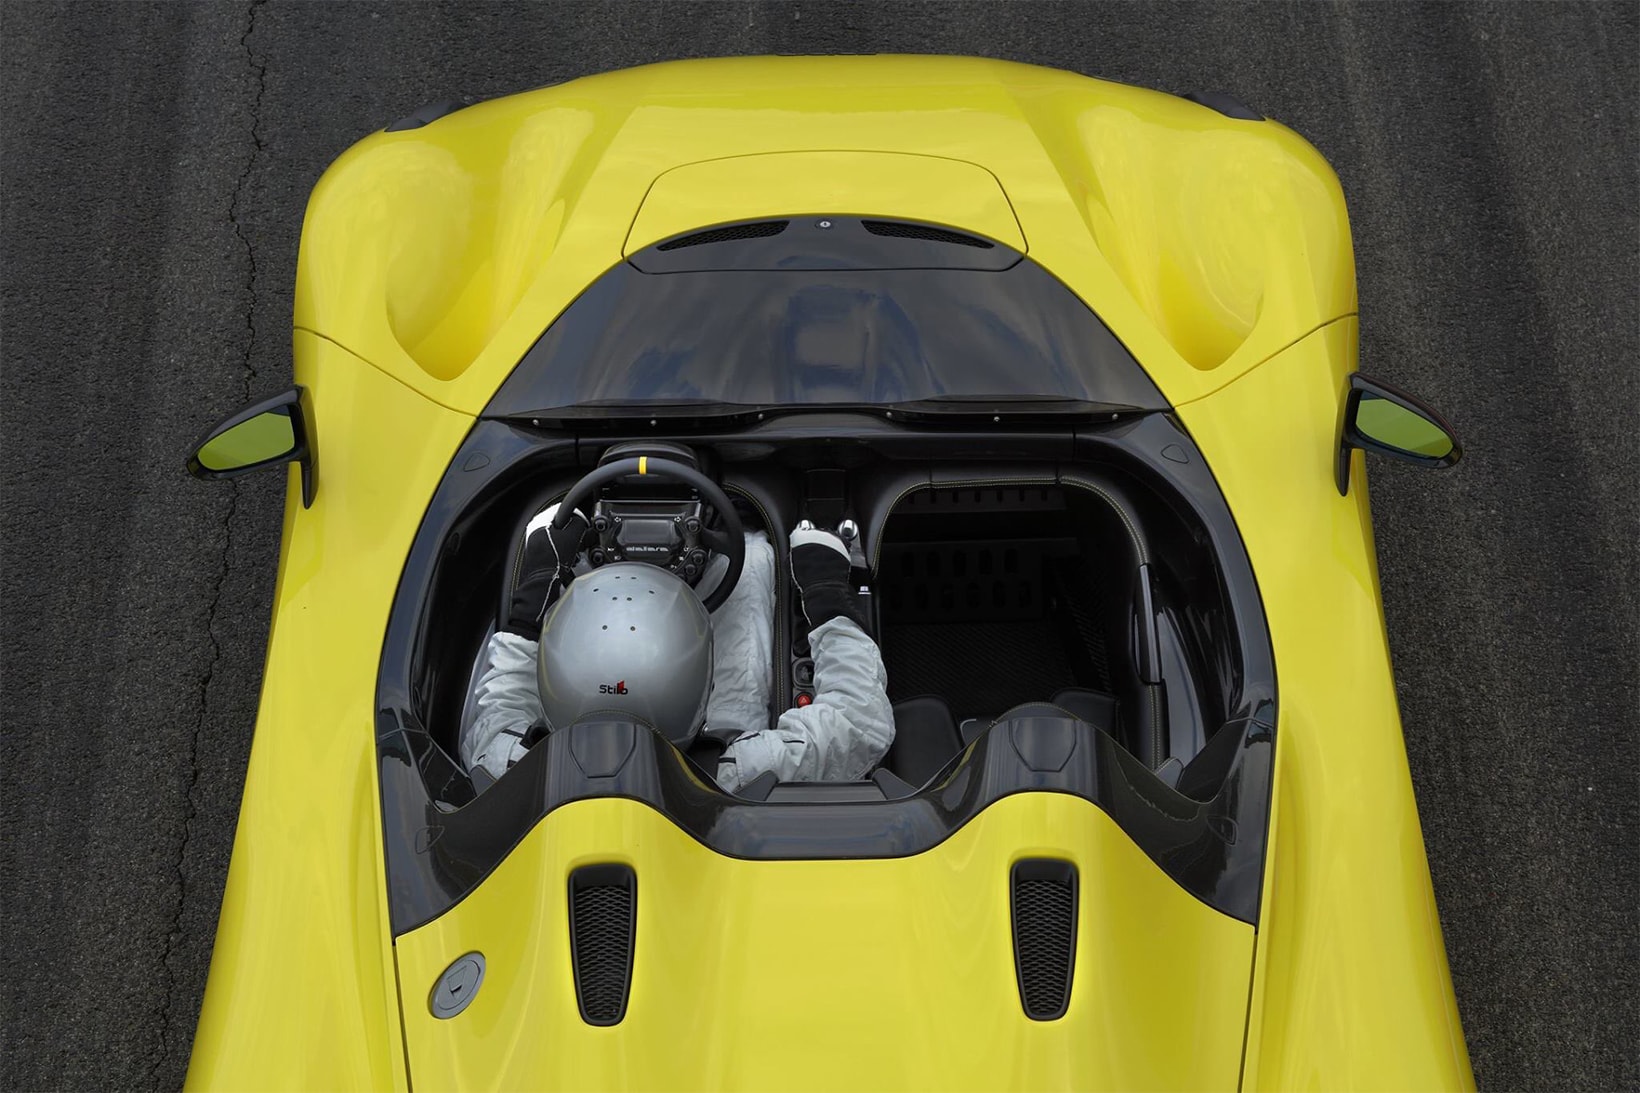 Dallara Stradale Road Car Unveiled Roadster yellow convertible sportscar sports race racecar Italian italy carbon-fiber no doors doorless